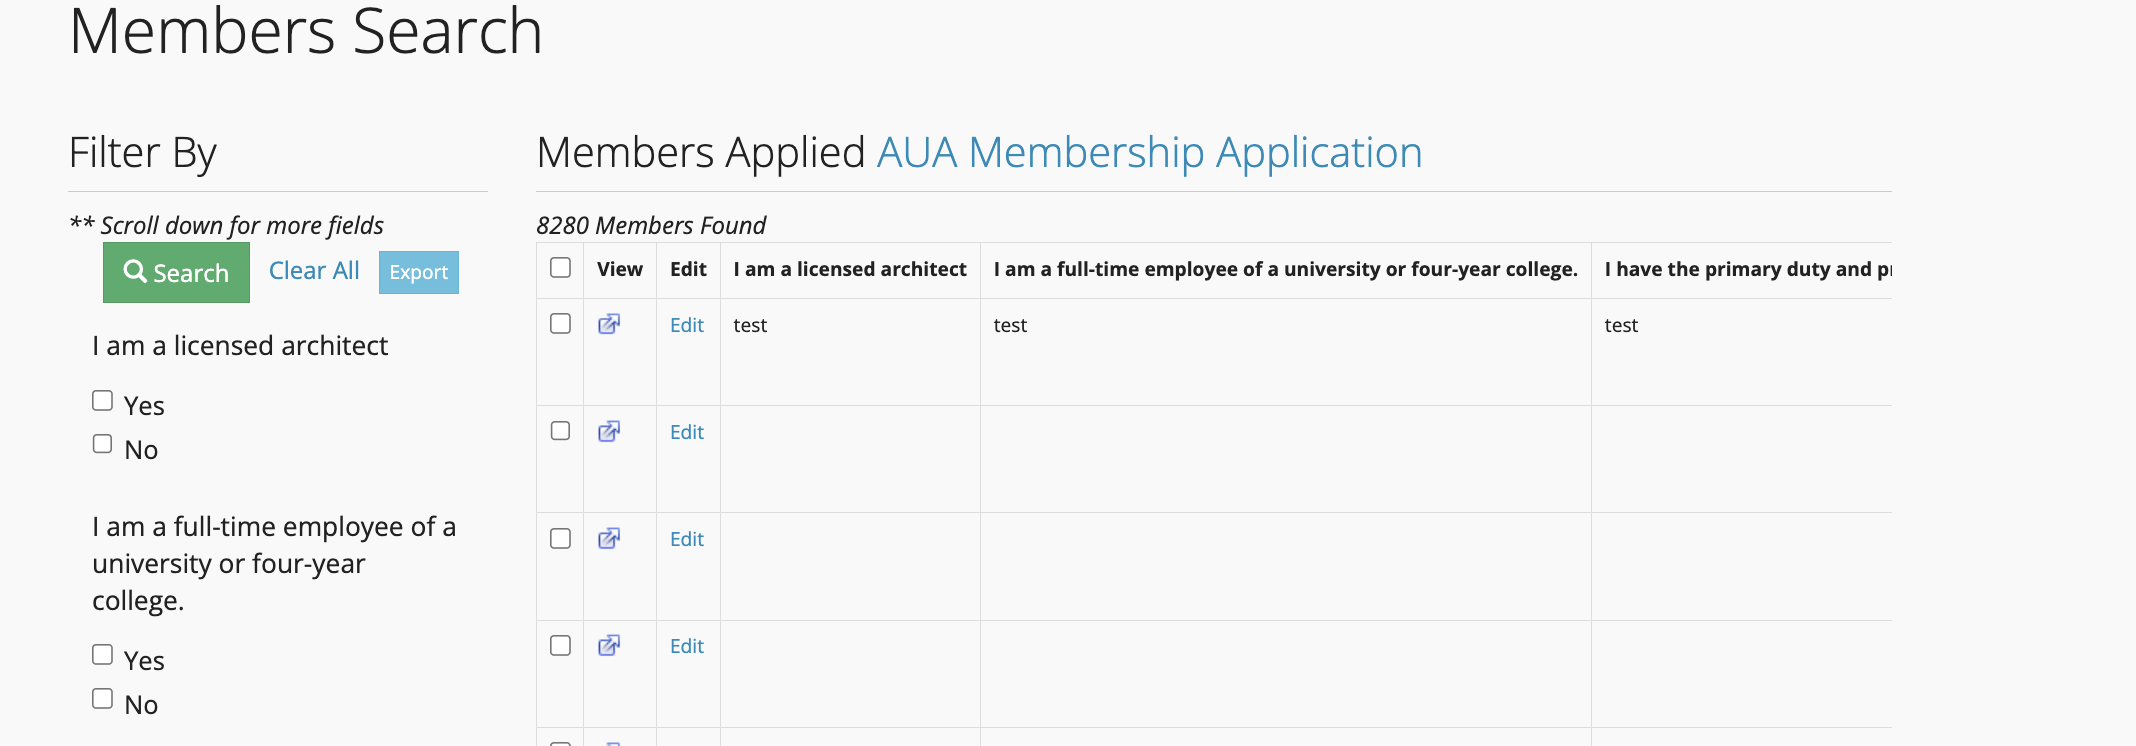 Membership Application Search